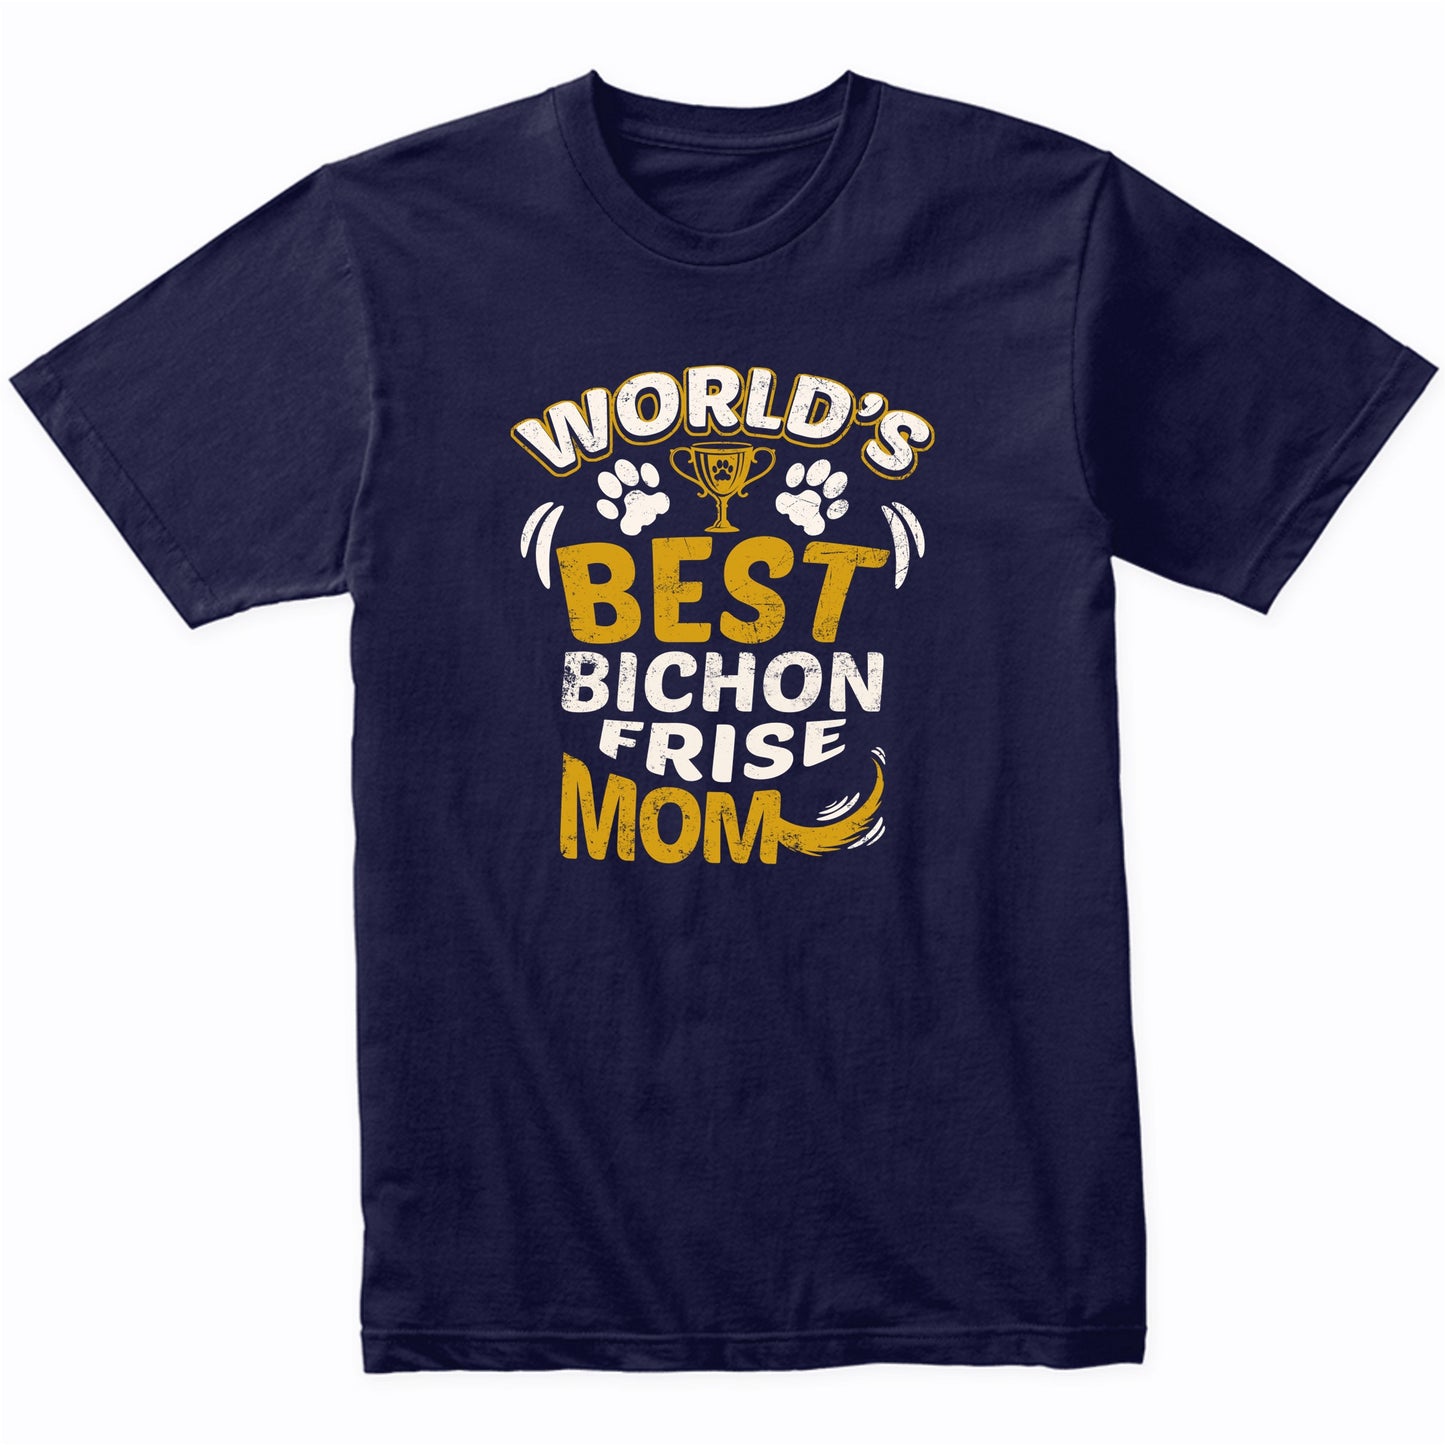 World's Best Bichon Frise Mom Graphic T-Shirt